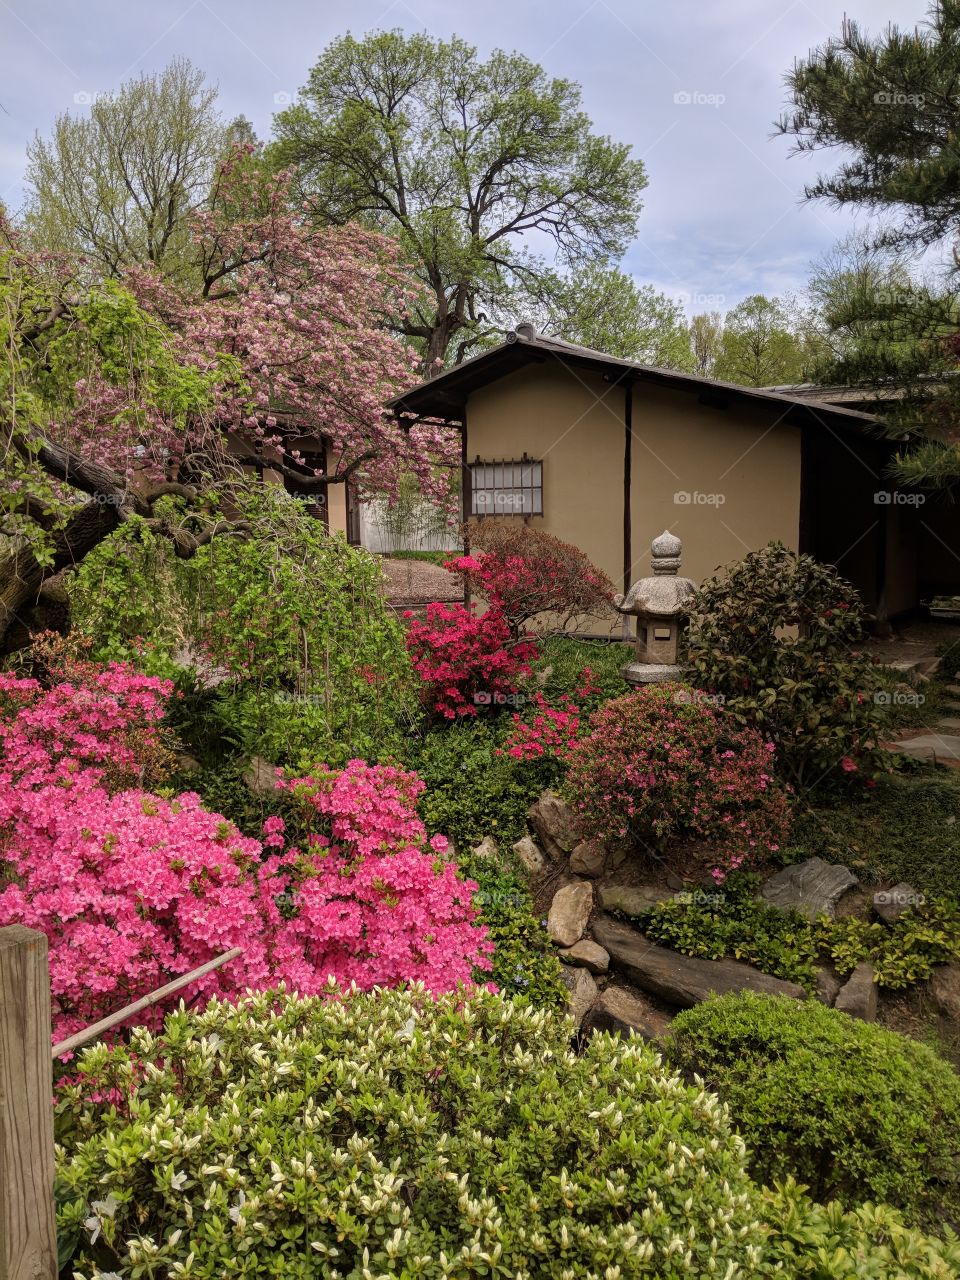 Colorful garden outside of a Japanese tea house.